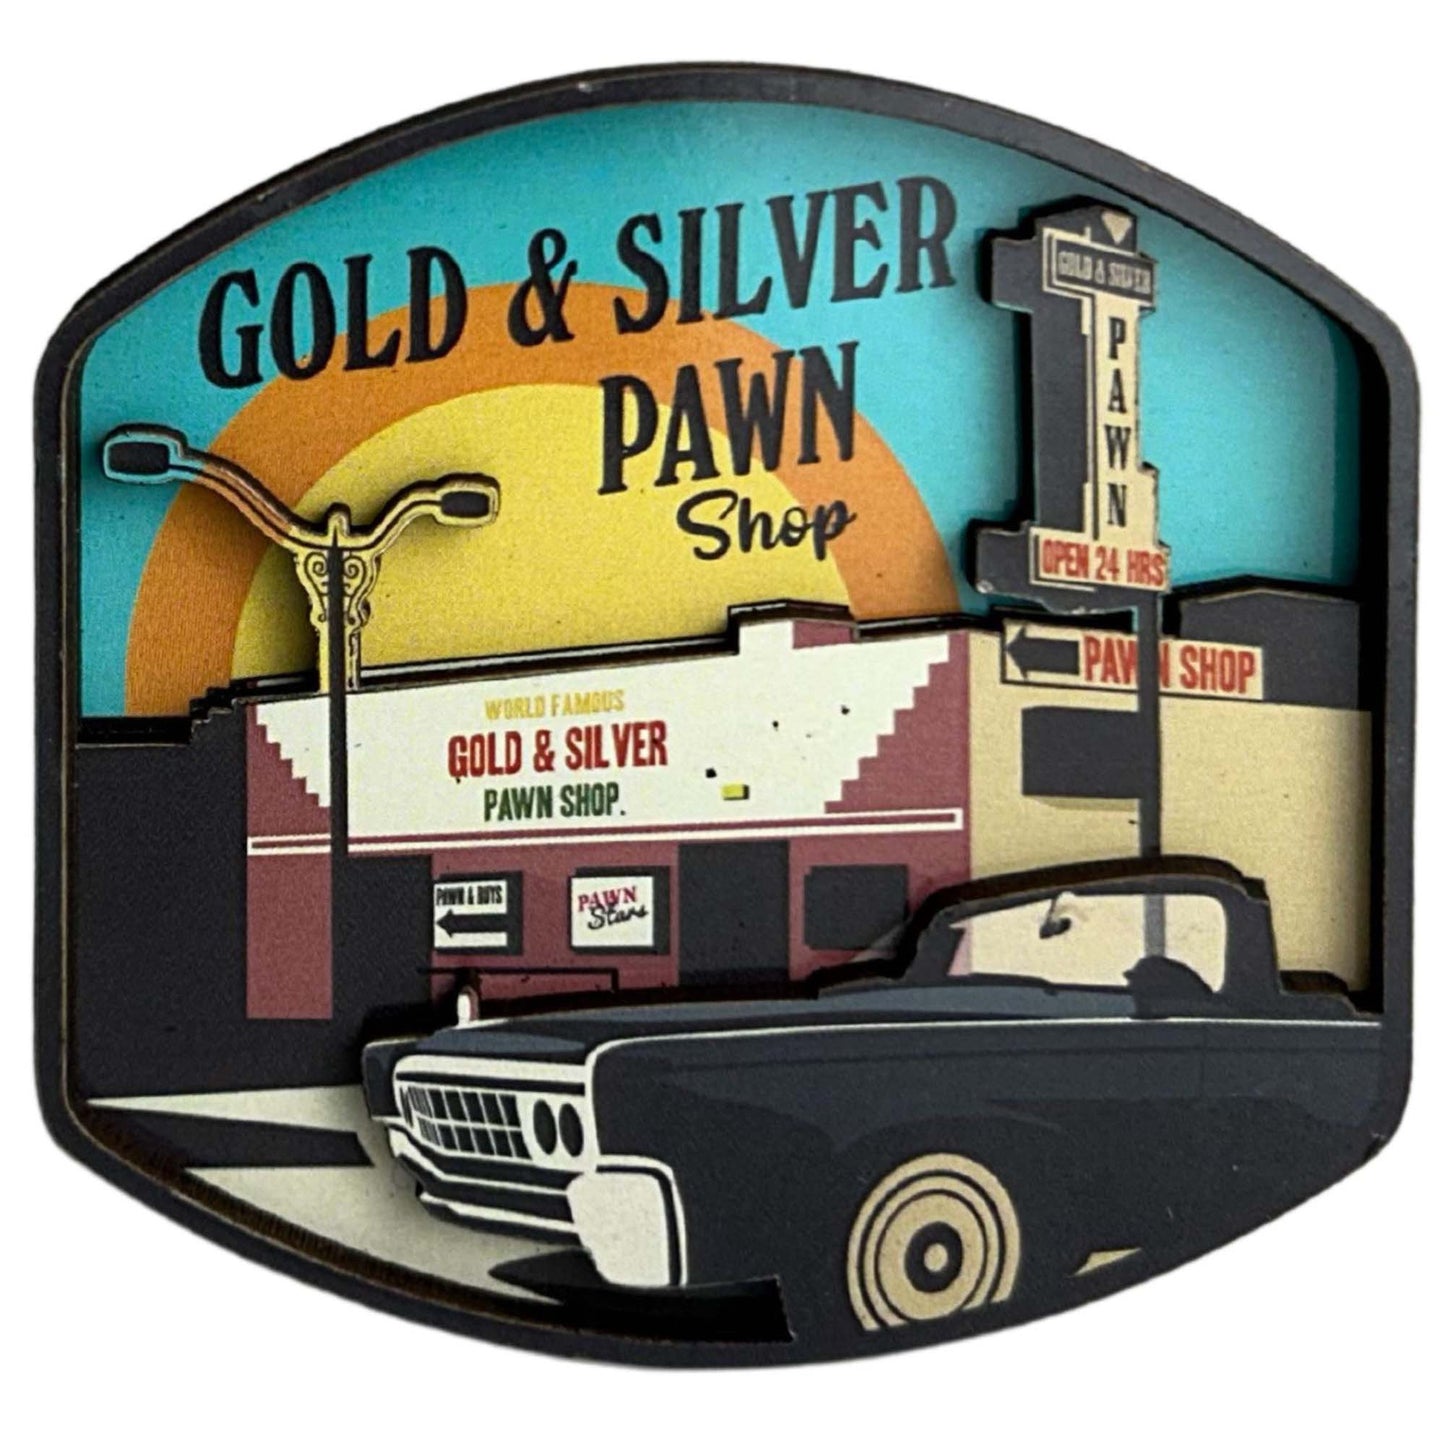 Gold & Silver Pawn Shop 3D Magnet Front